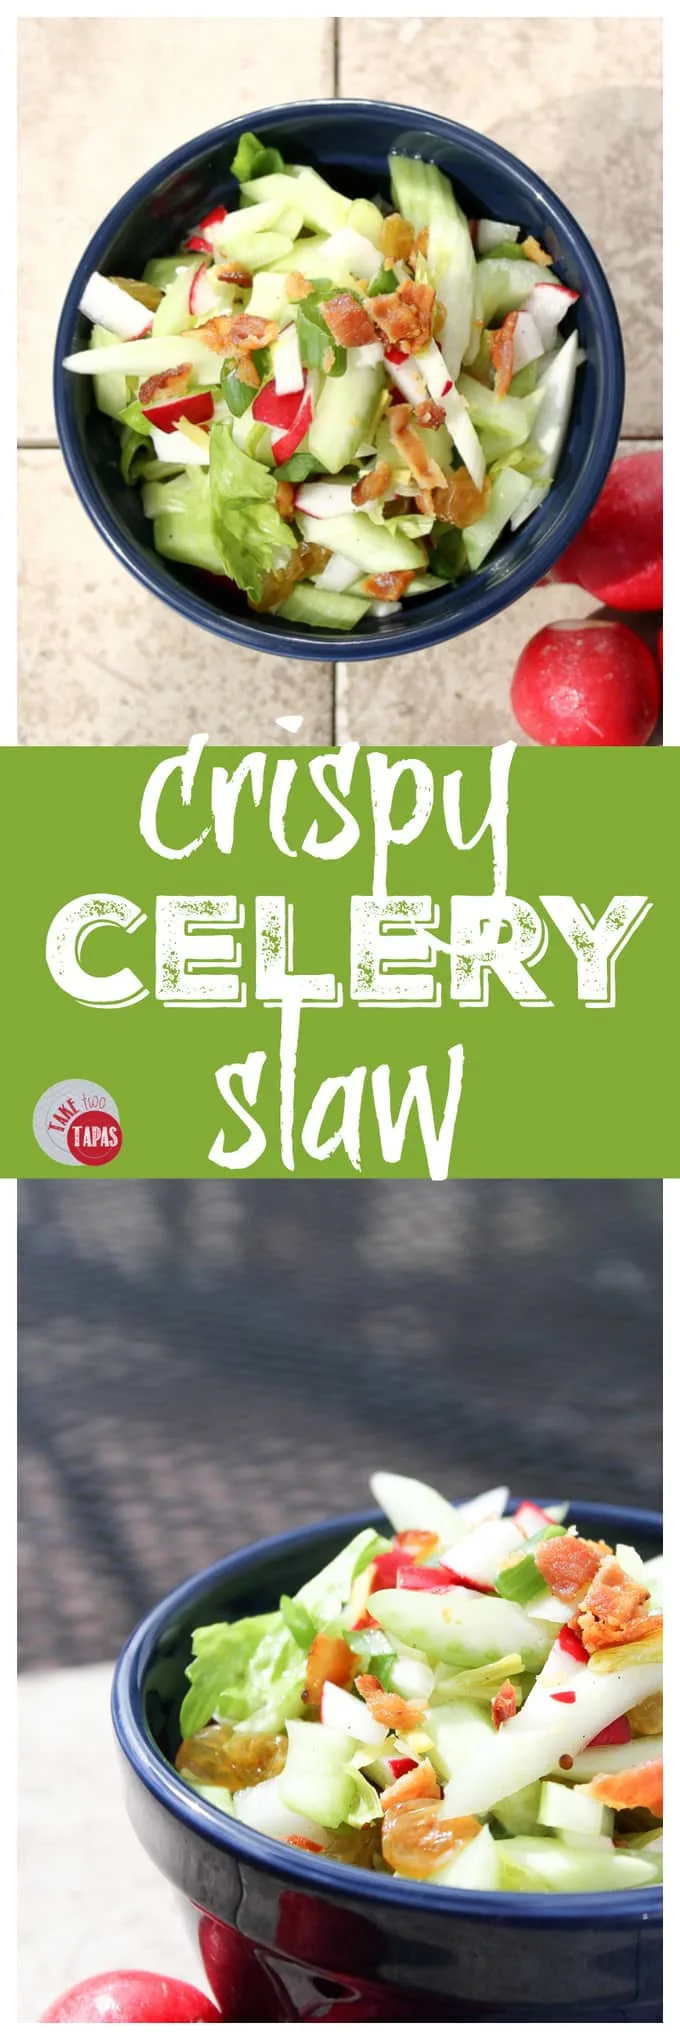 Pinterest double image with text "Crispy Celery Slaw"